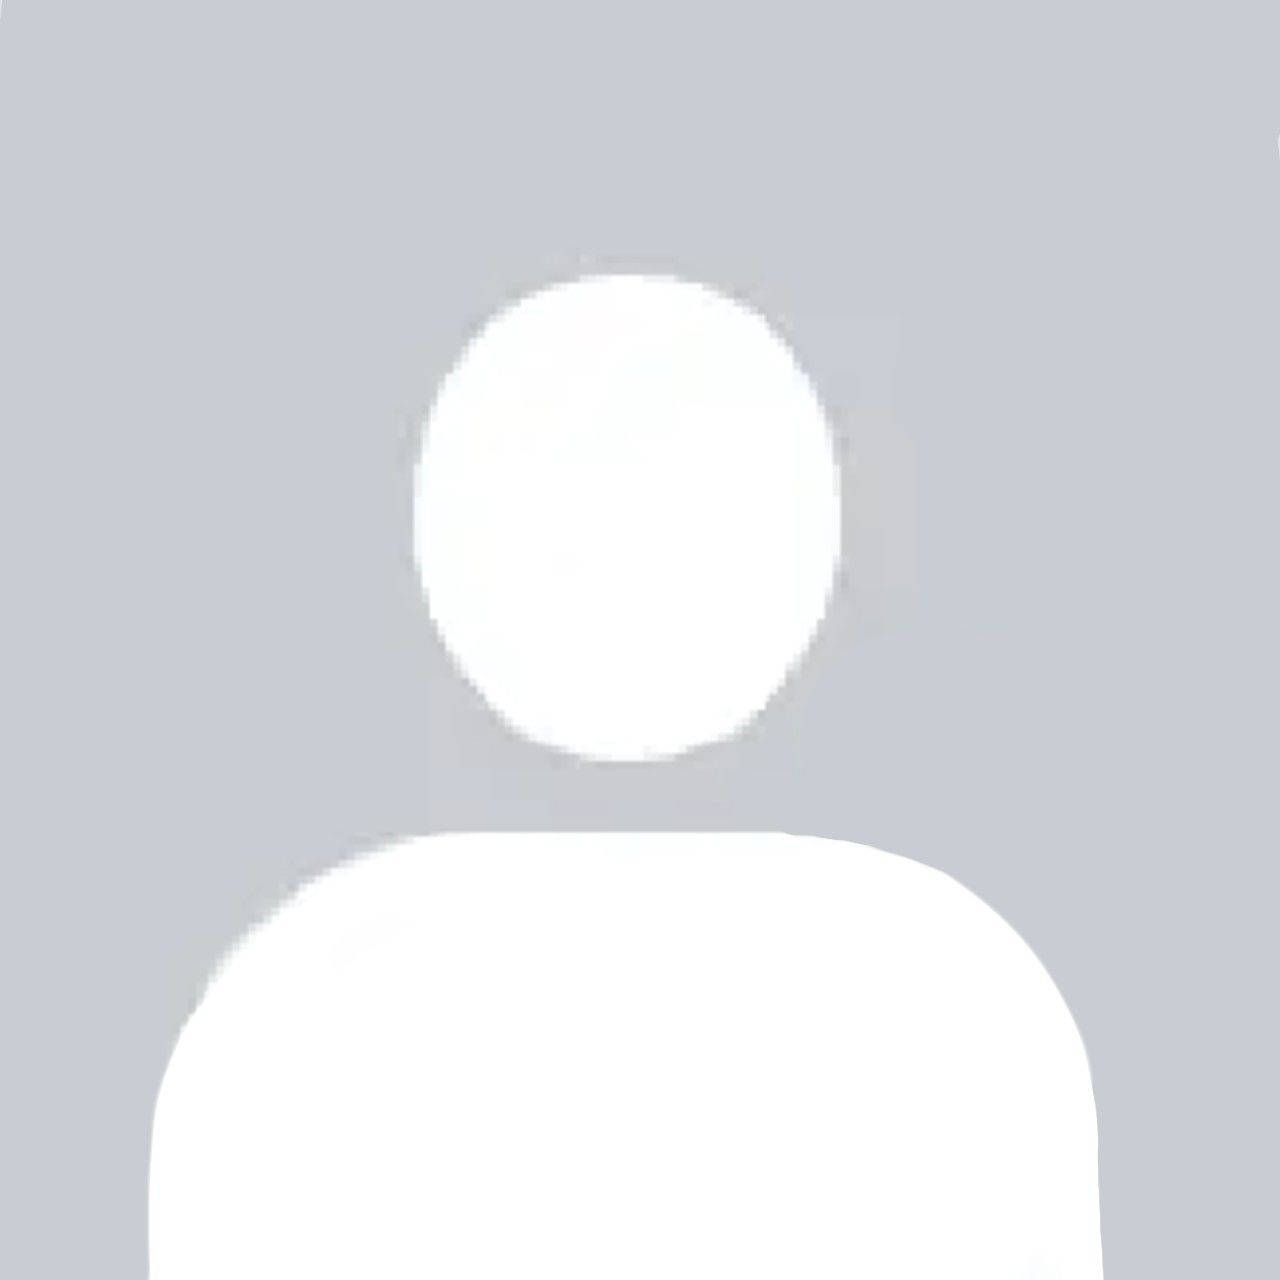 default profile image